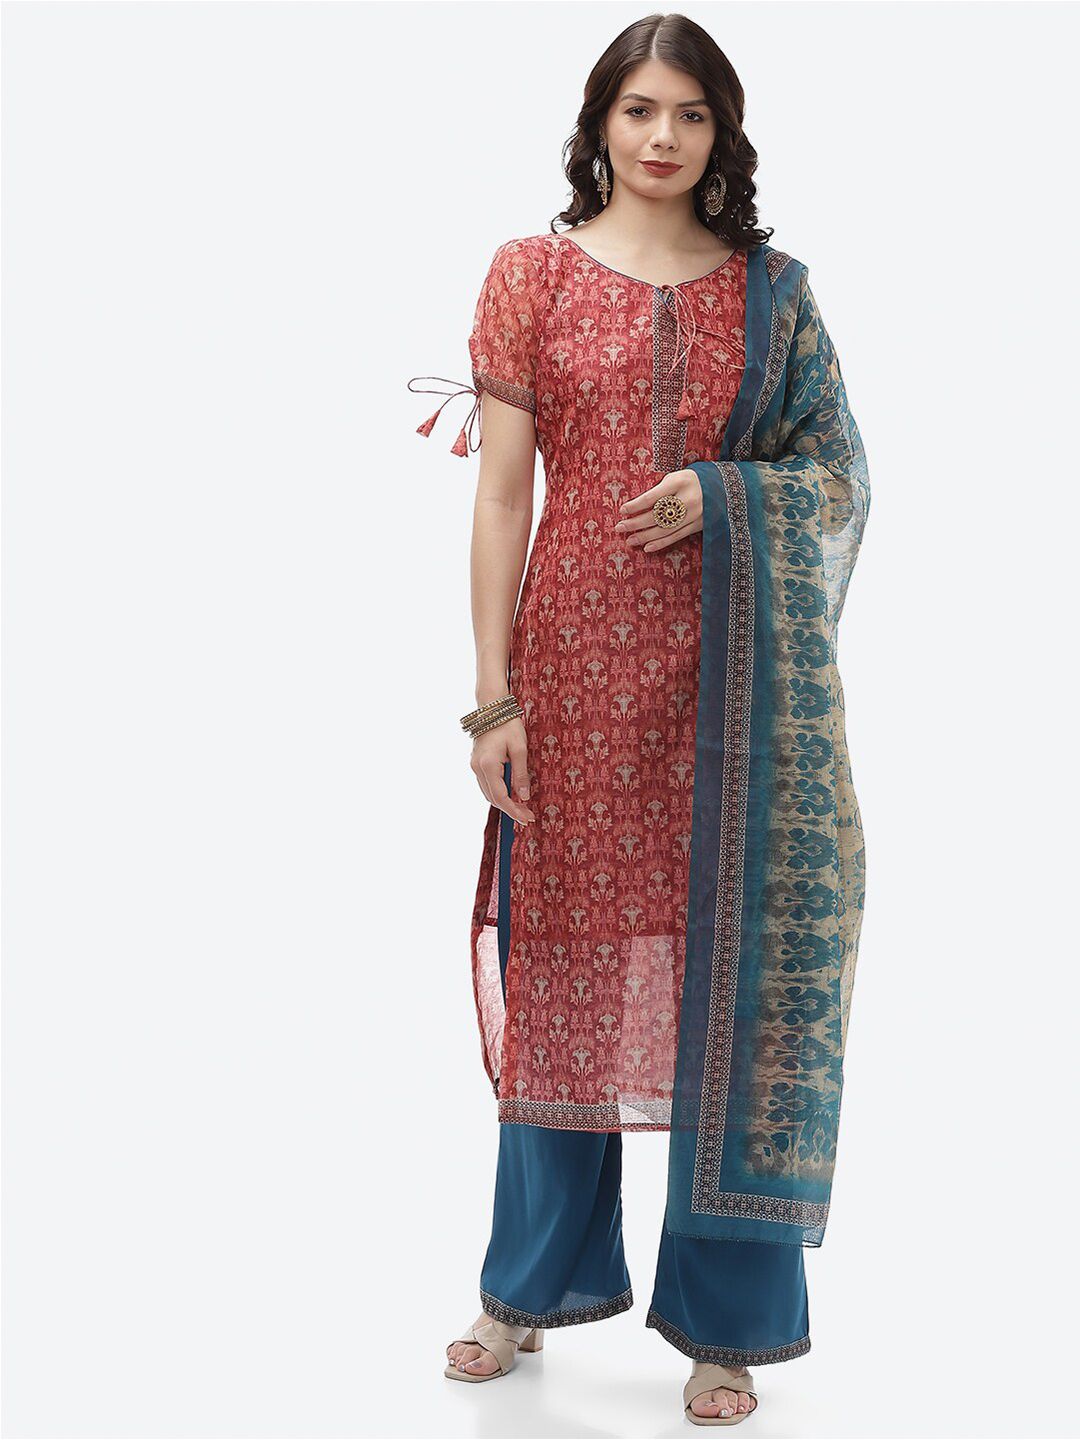 Biba Peach-Coloured & Blue Unstitched Dress Material Price in India